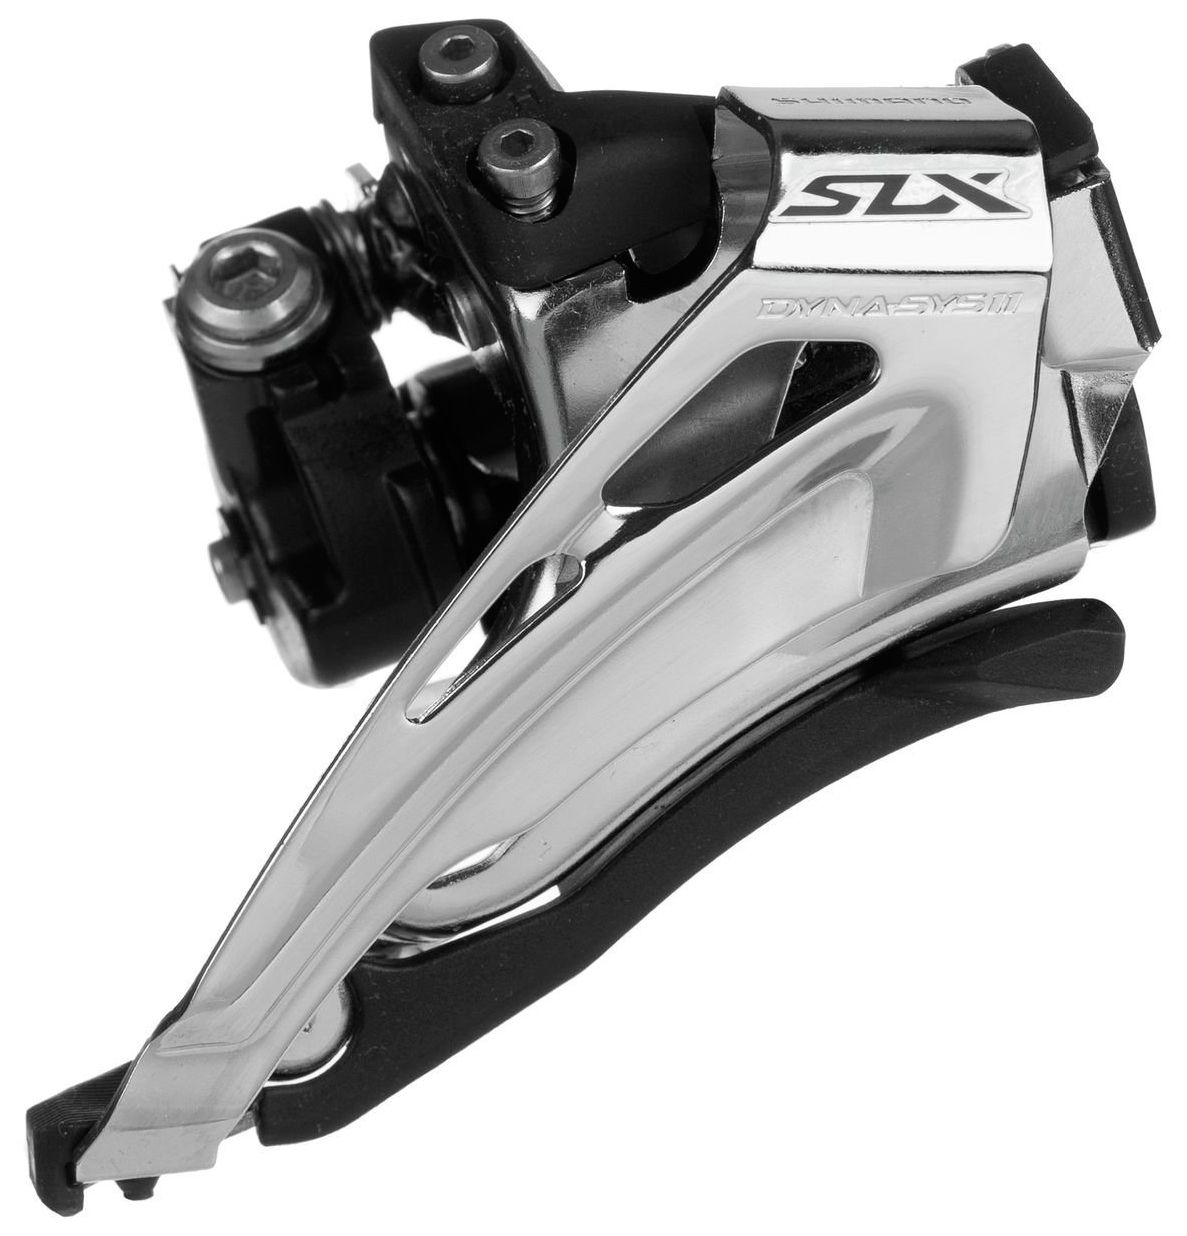  Переключатель передний для велосипеда Shimano SLX M7025-L, 2x11